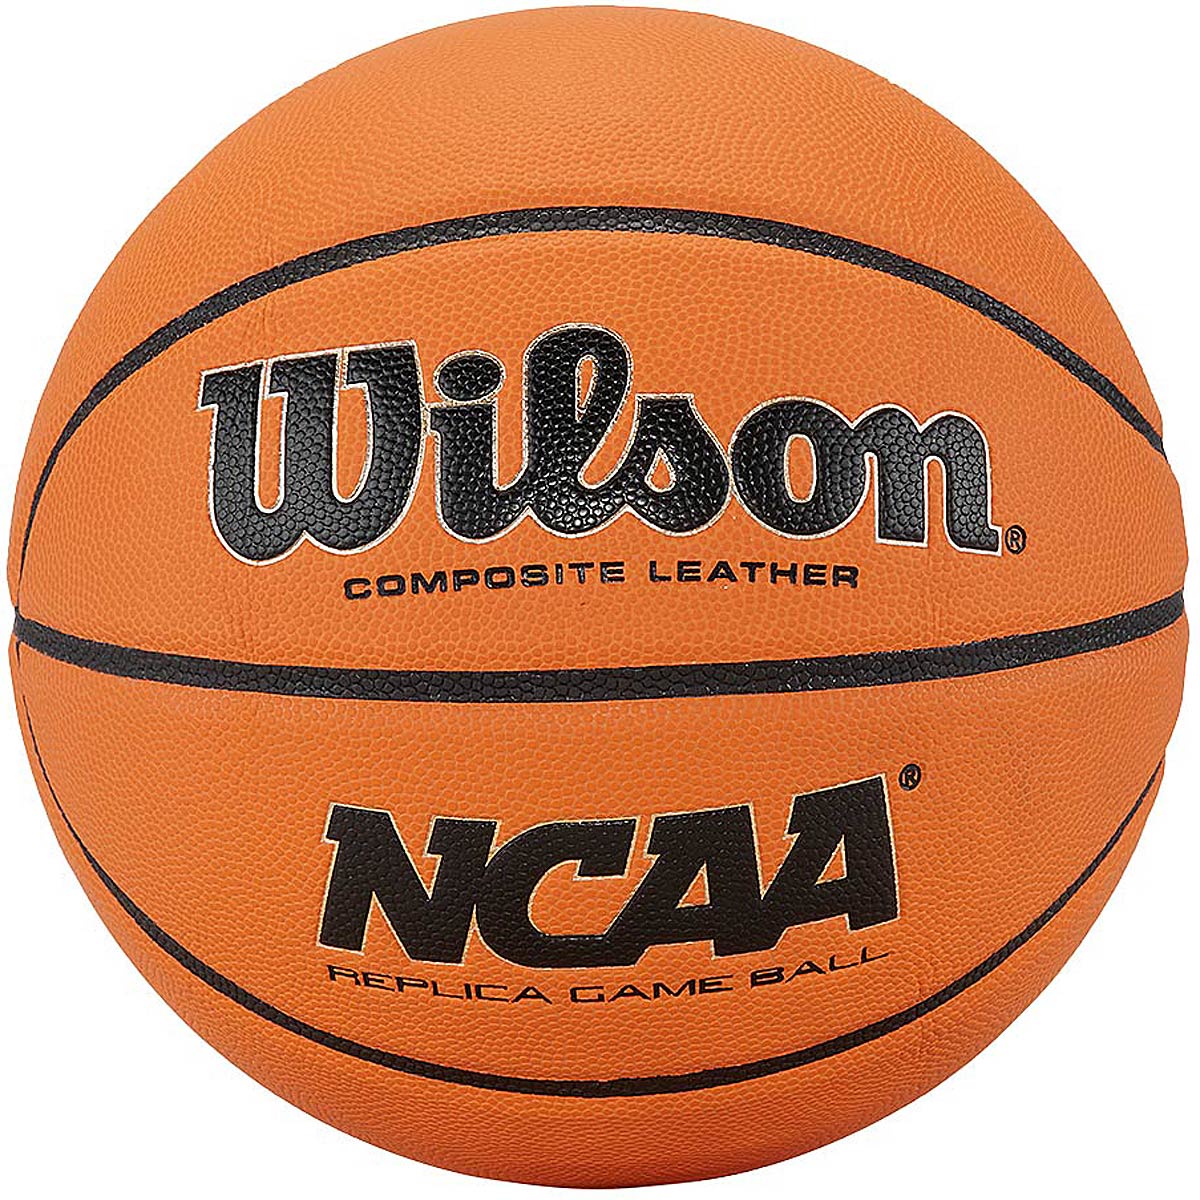 Wilson Ncaa Evo Nxt Replica Basketball, Orange